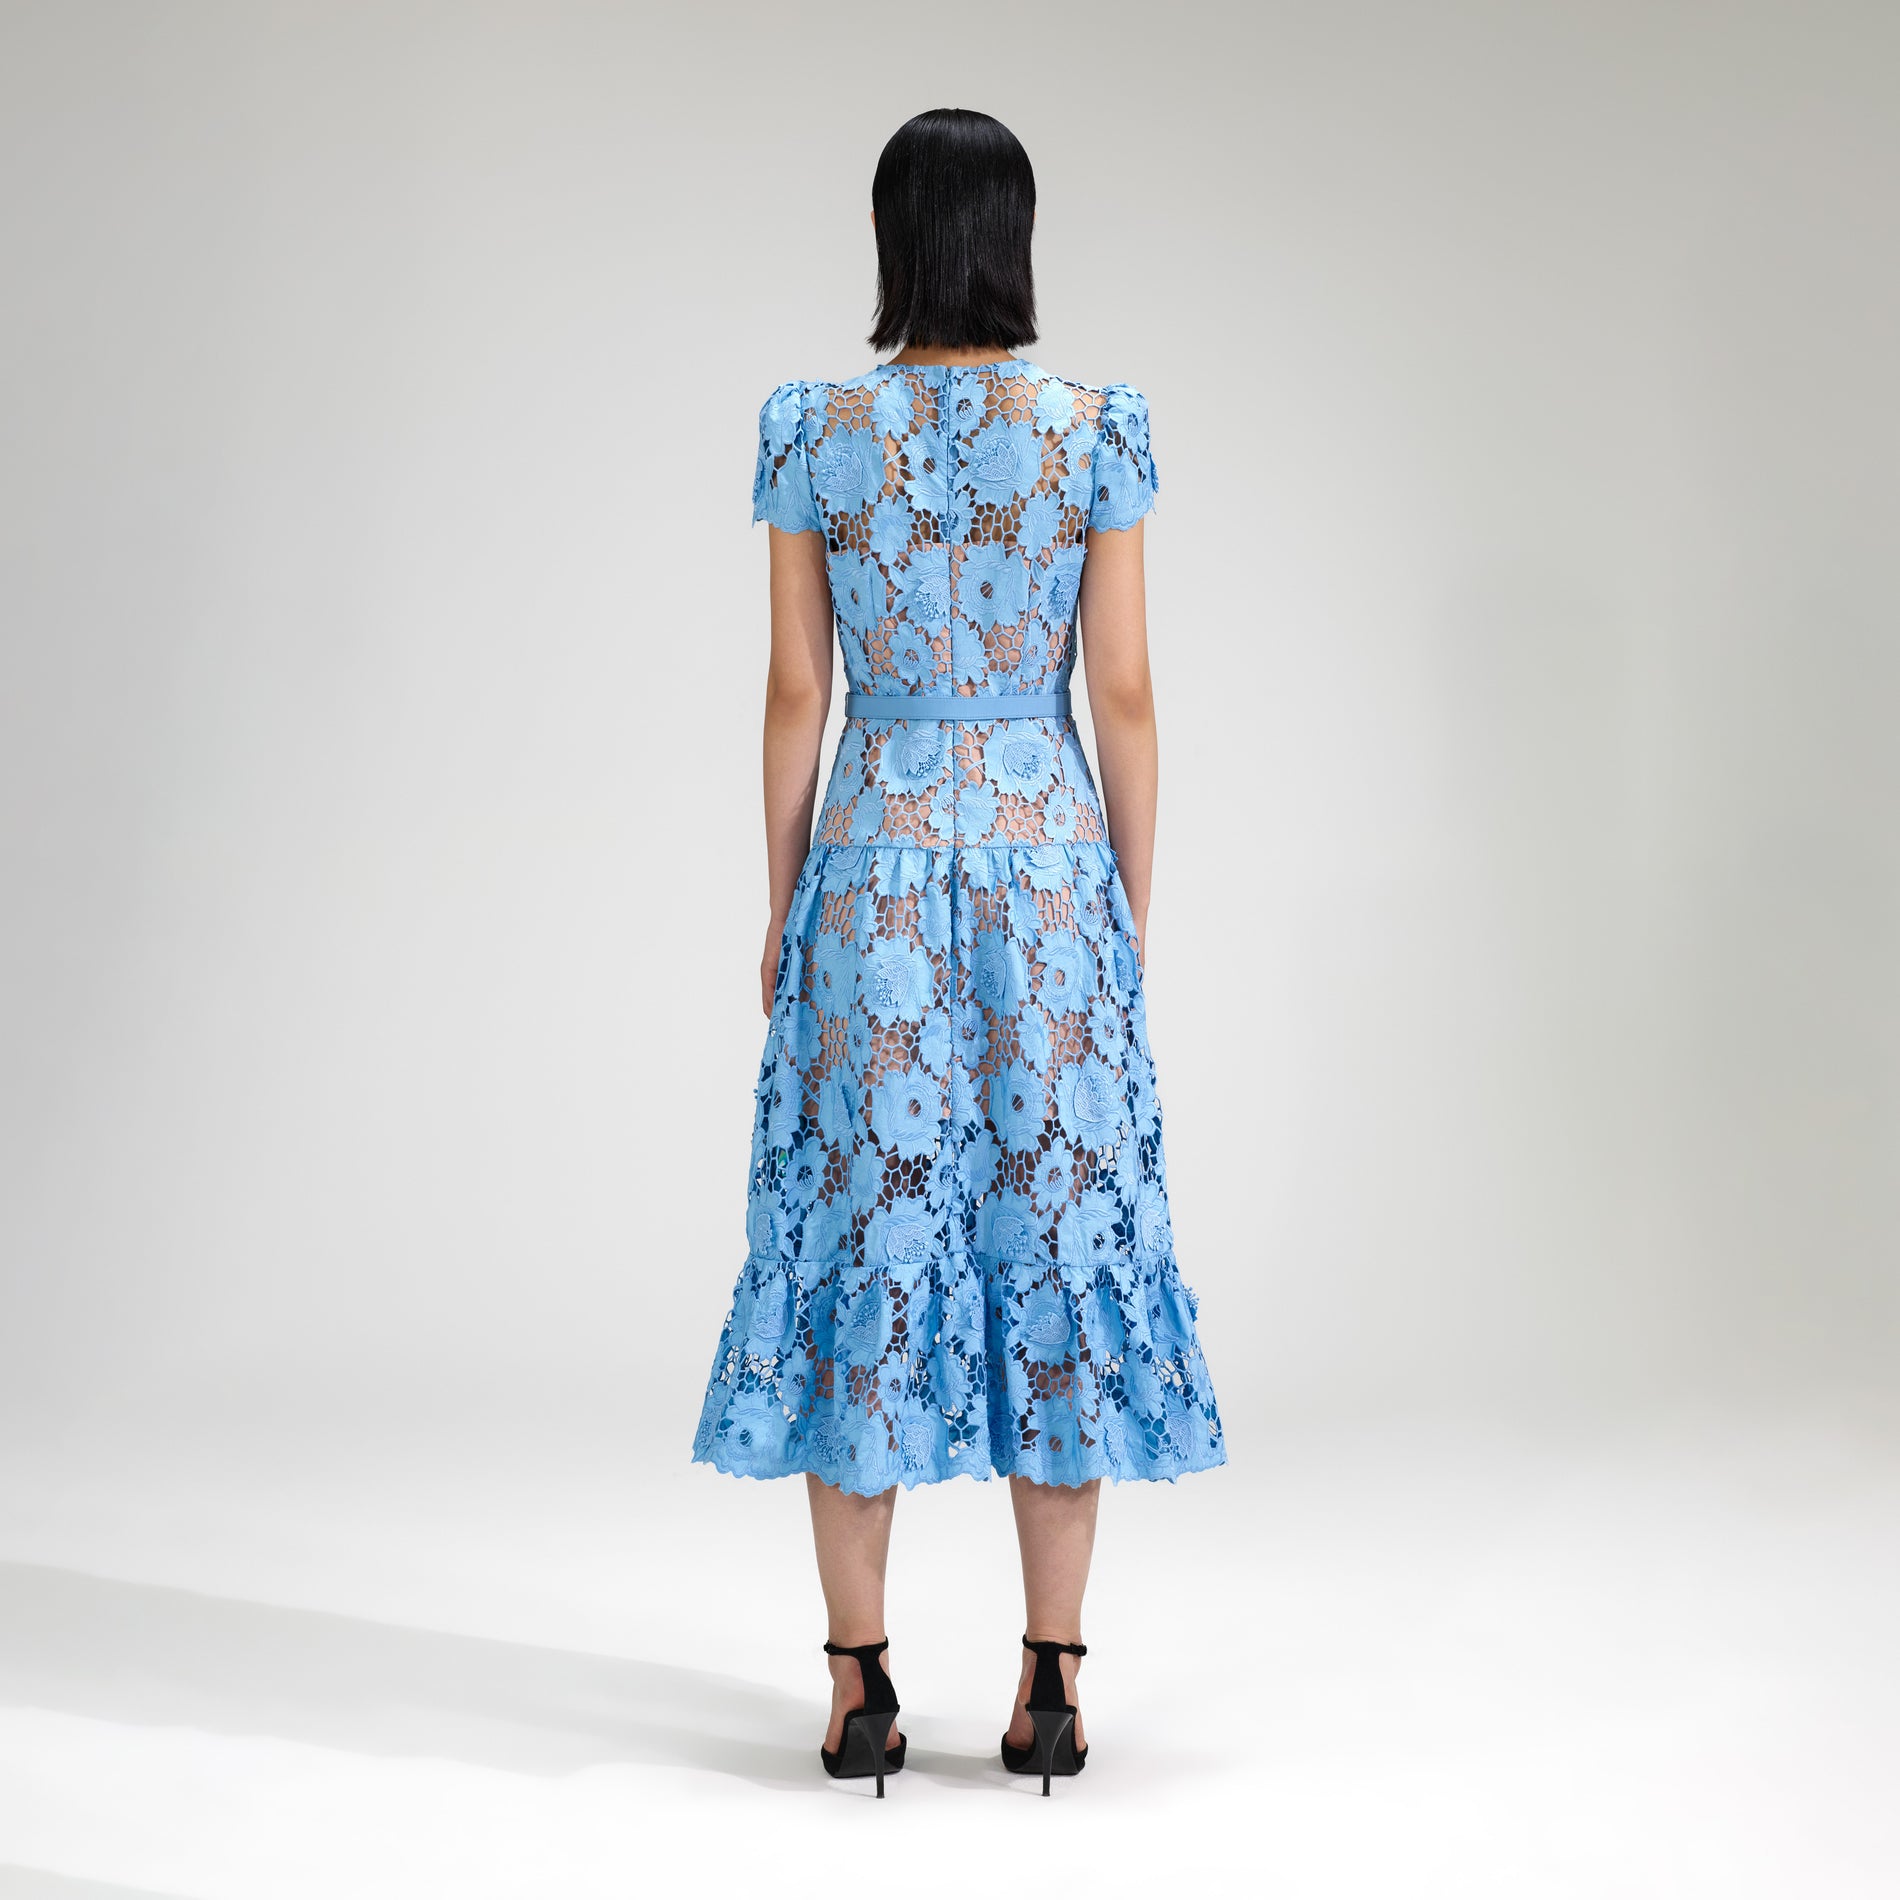 A woman wearing the Blue 3D Cotton Lace Midi Dress